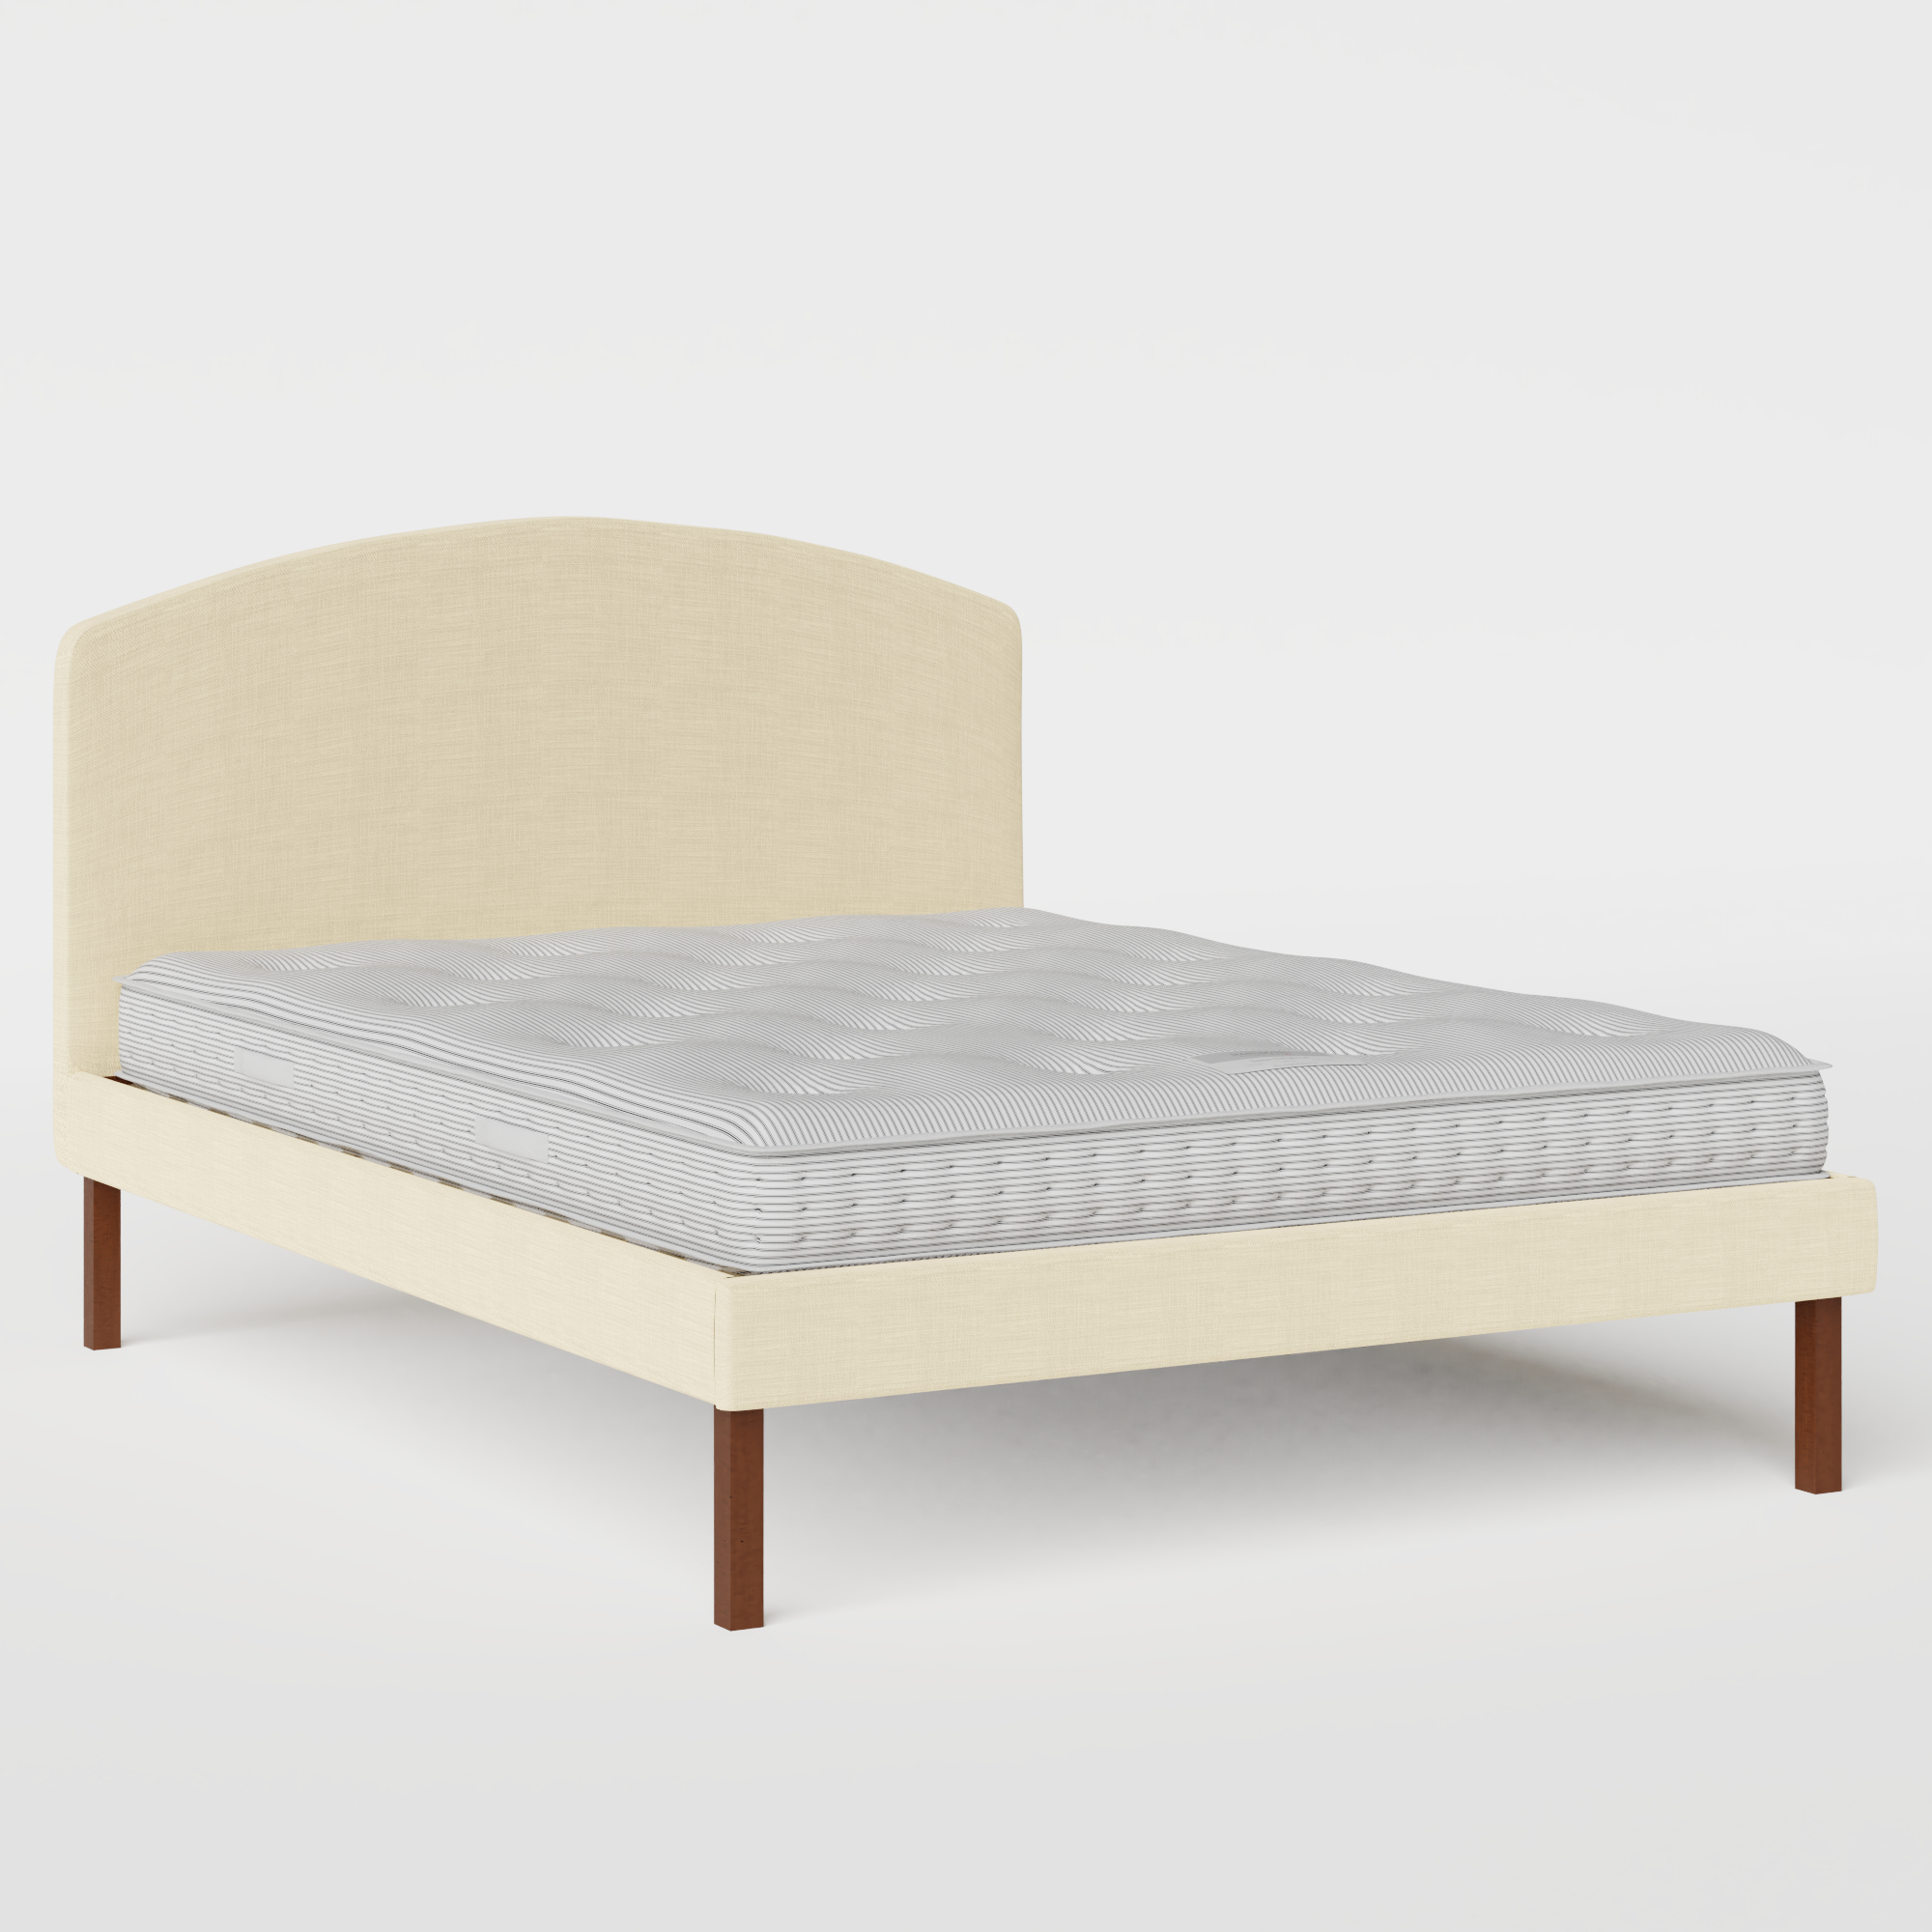 Okawa Upholstered polsterbett in natural stoff